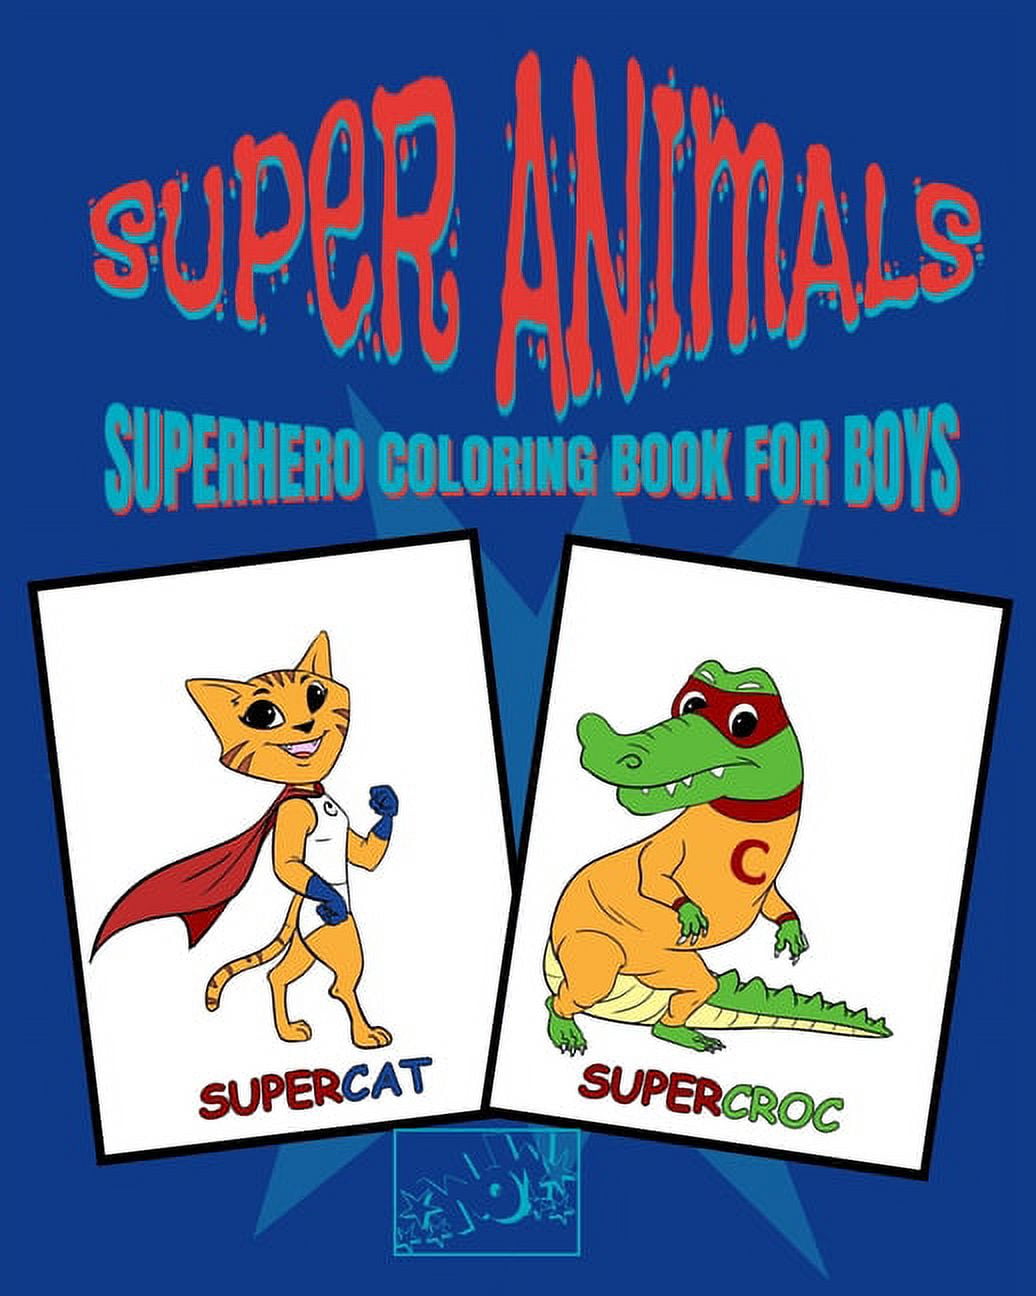 Beach Kids 12 Bulk Superhero coloring Books for Boys Ages 4-8 - Assorted 12 coloring  Books Featuring Spiderman, Batman, Avengers, P